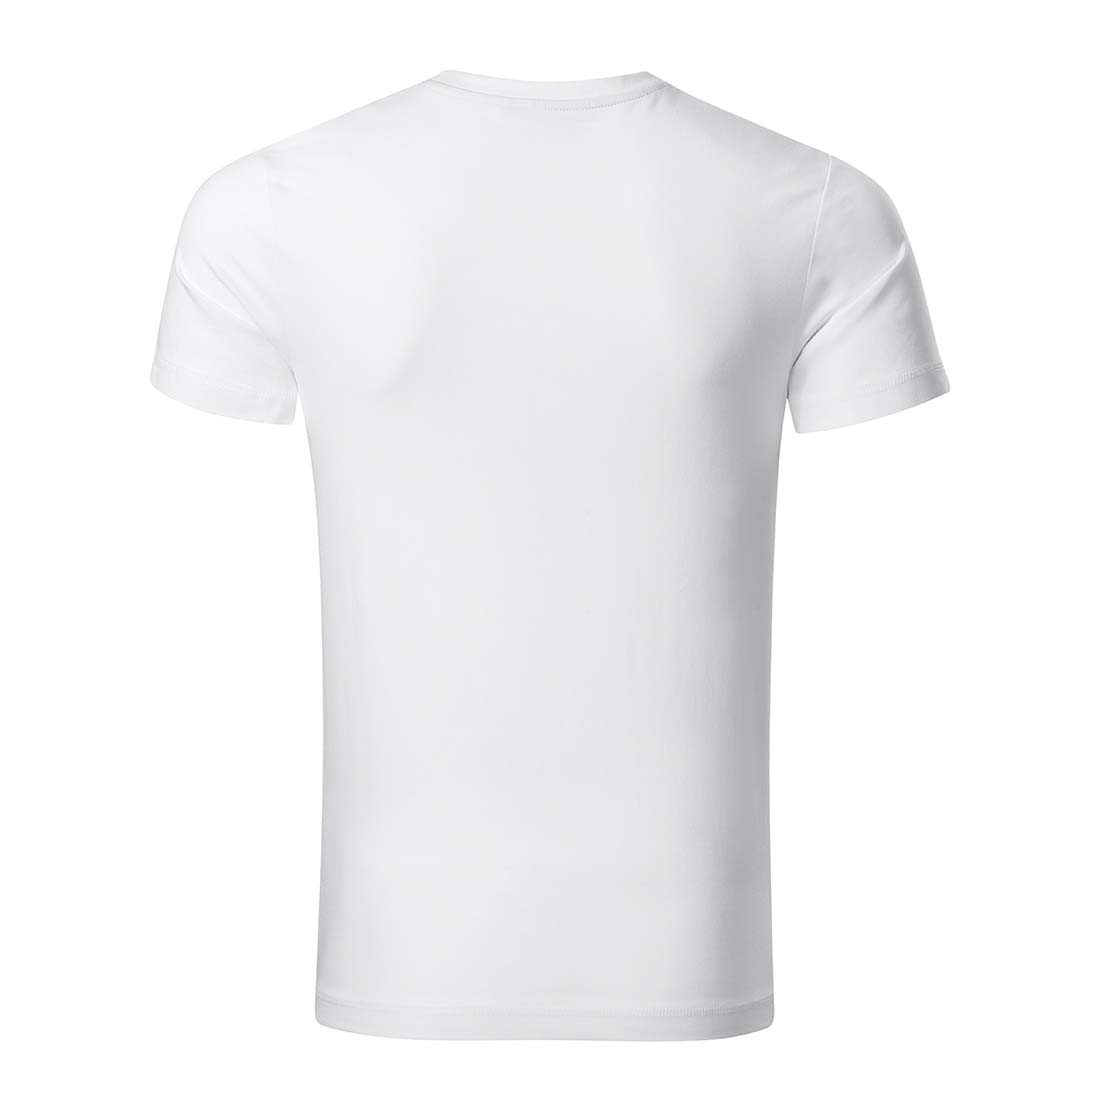 ACTION Men's T-shirt - Safetywear